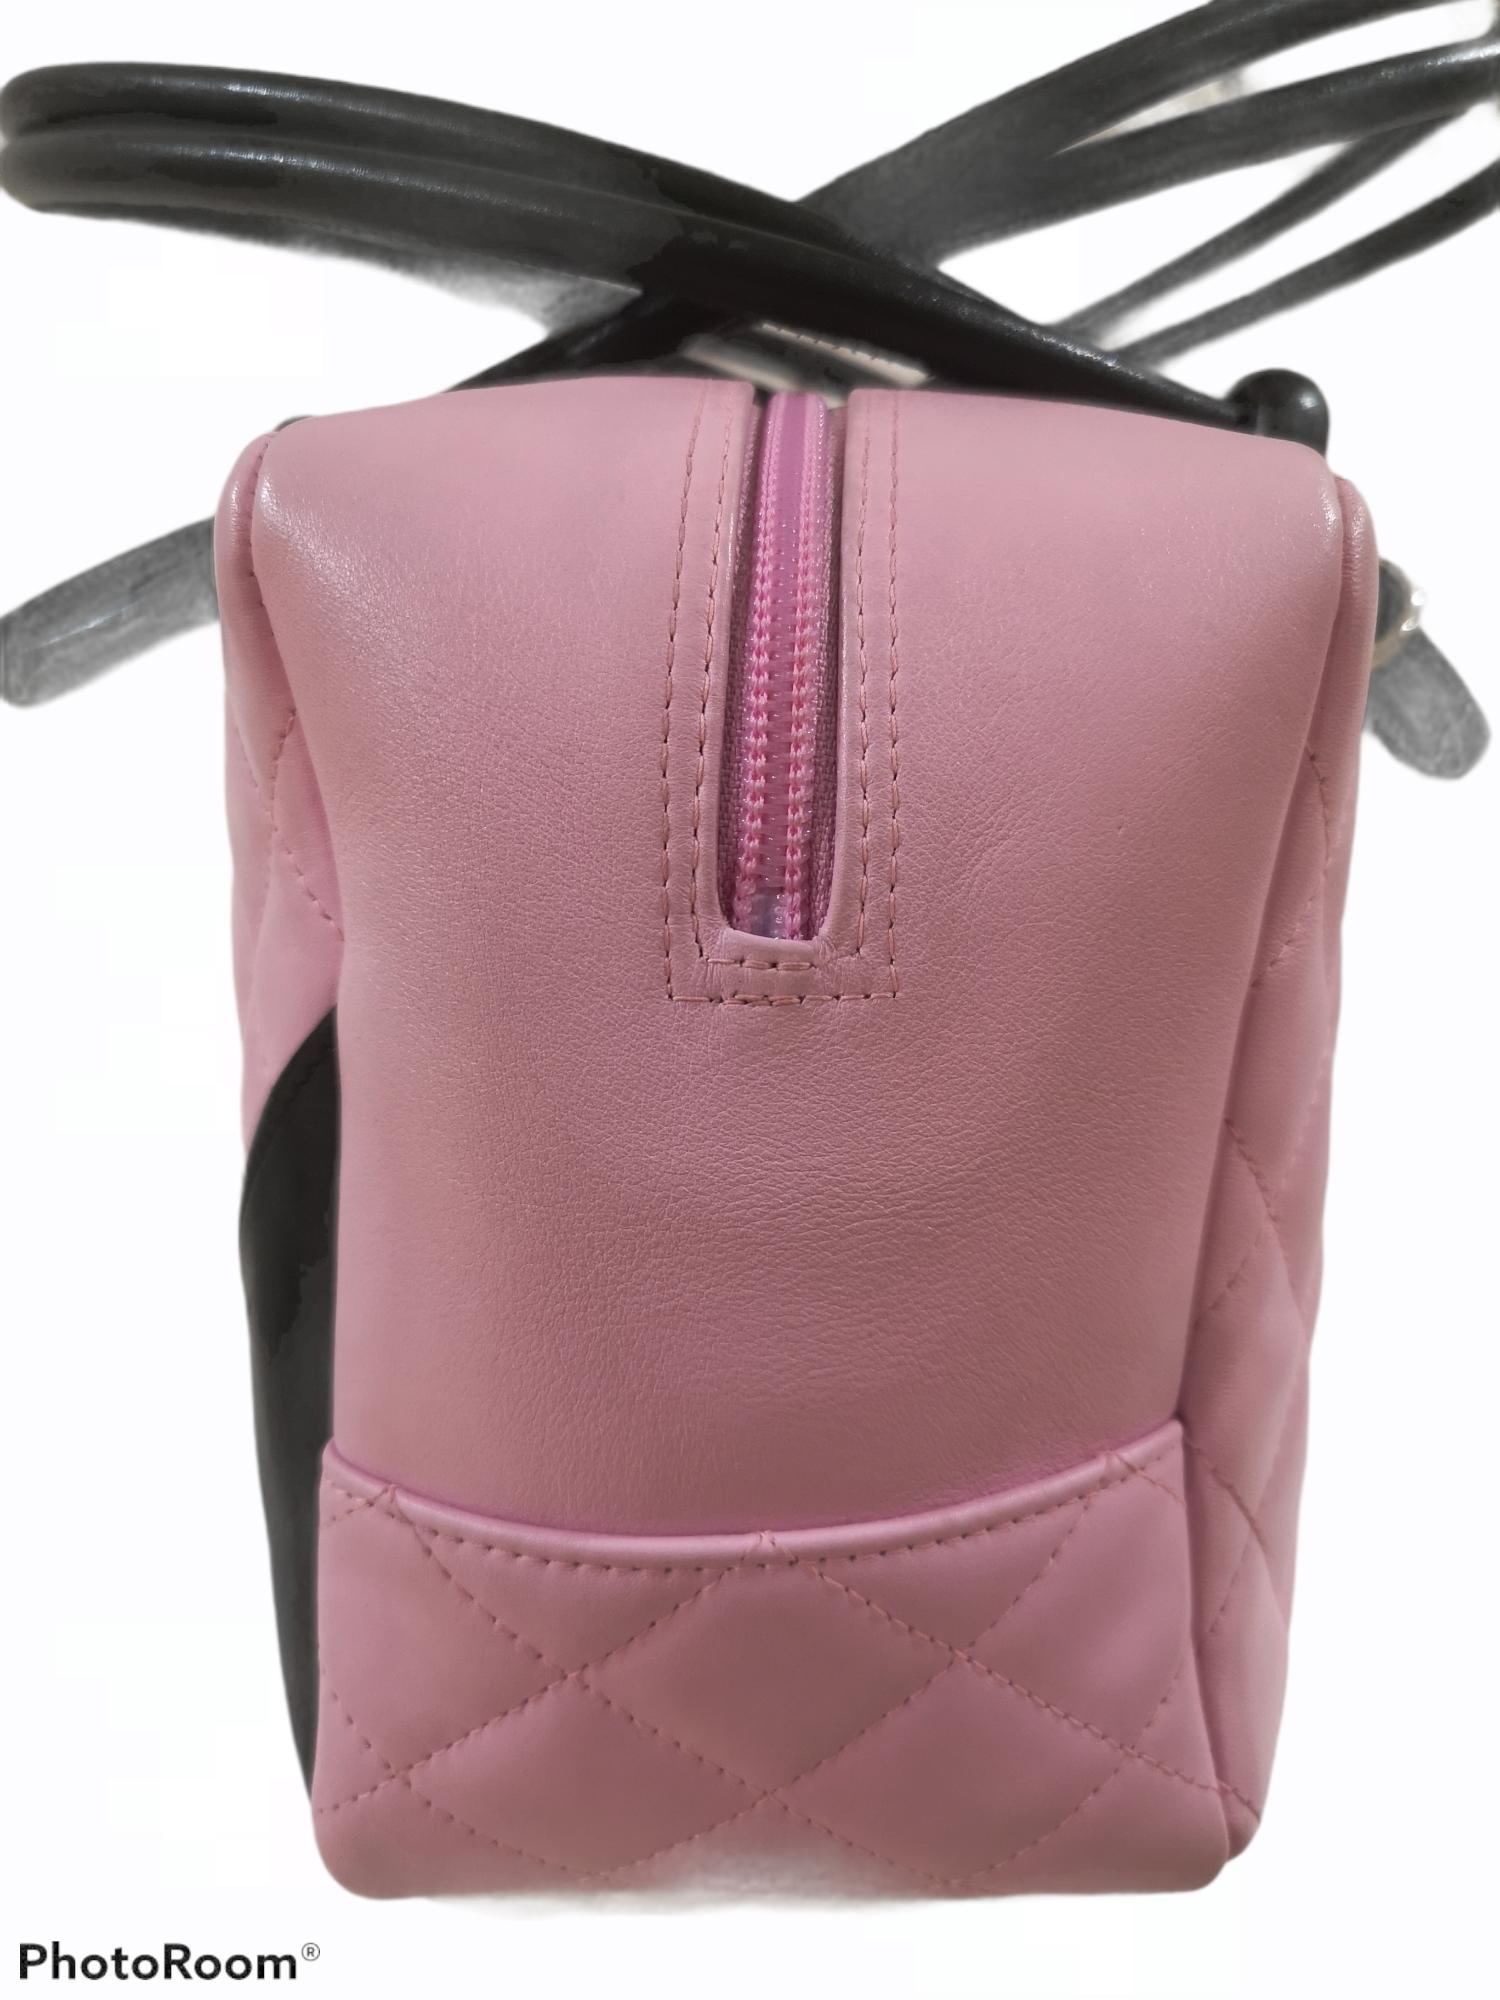 Brown Chanel pink black quilter leather Cambon bowler tote bag / shoulder bag